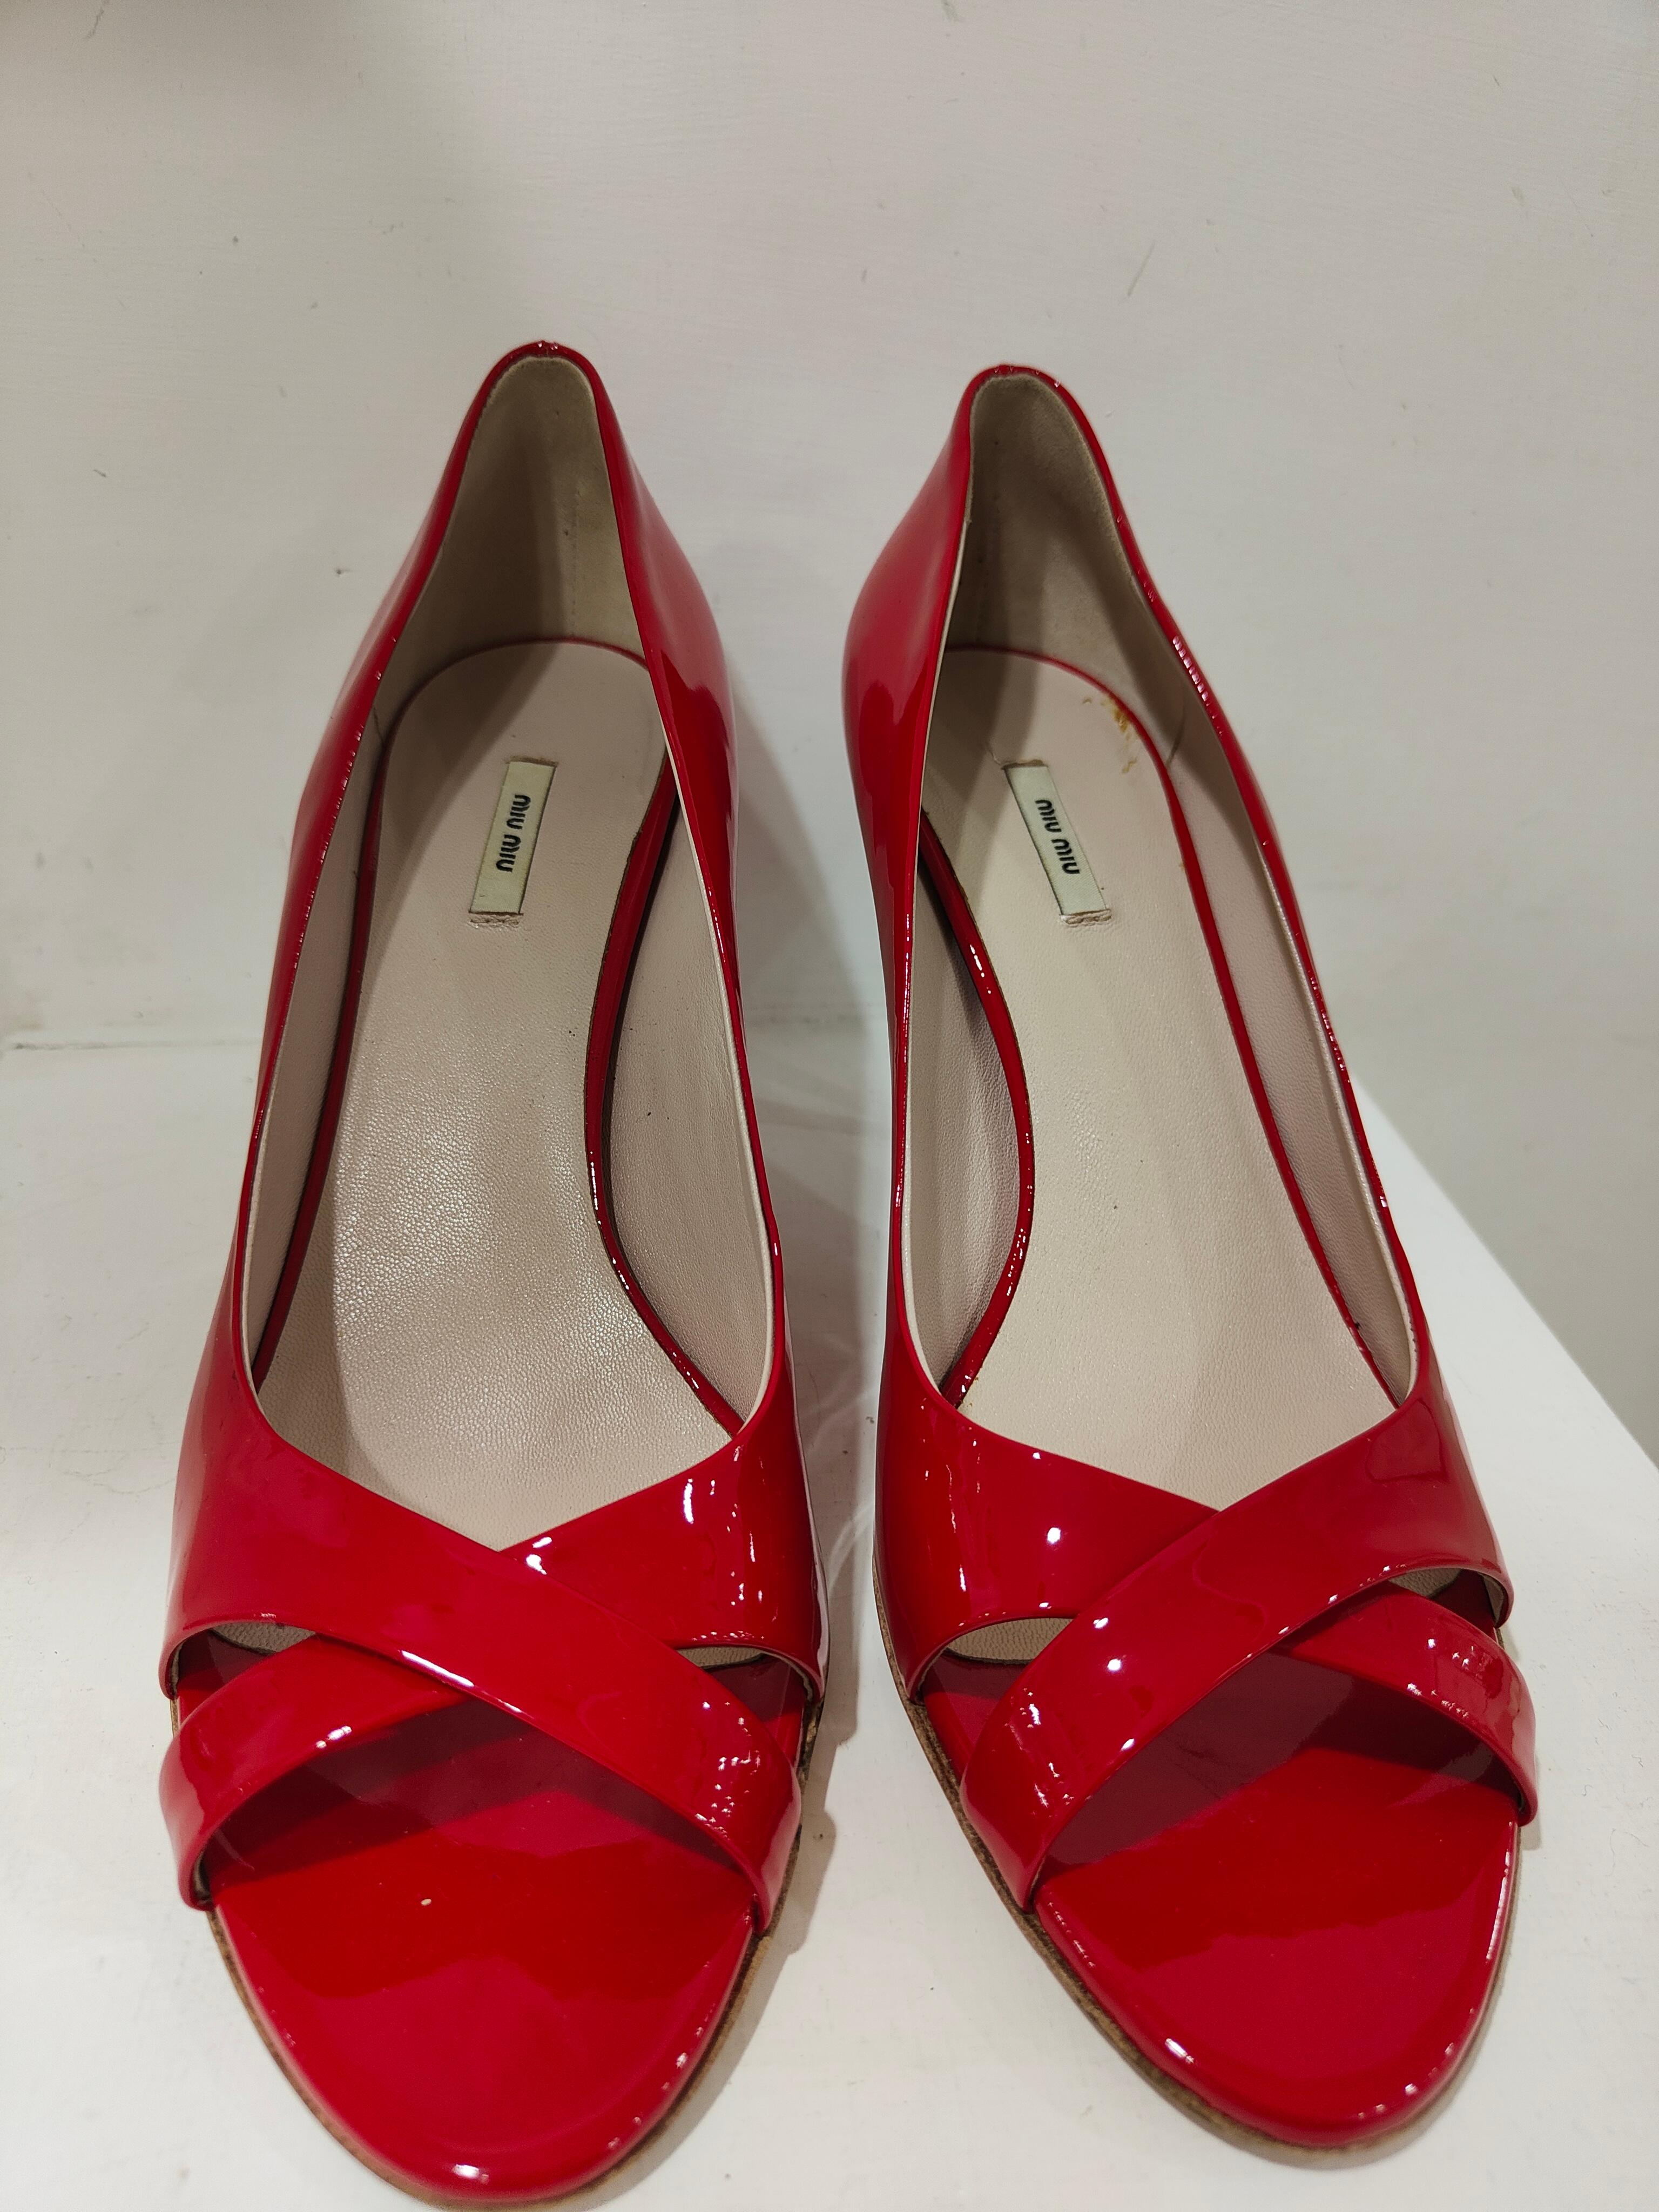 Miu Miu red patent leather decollete
size 38.5
heel 9 cm